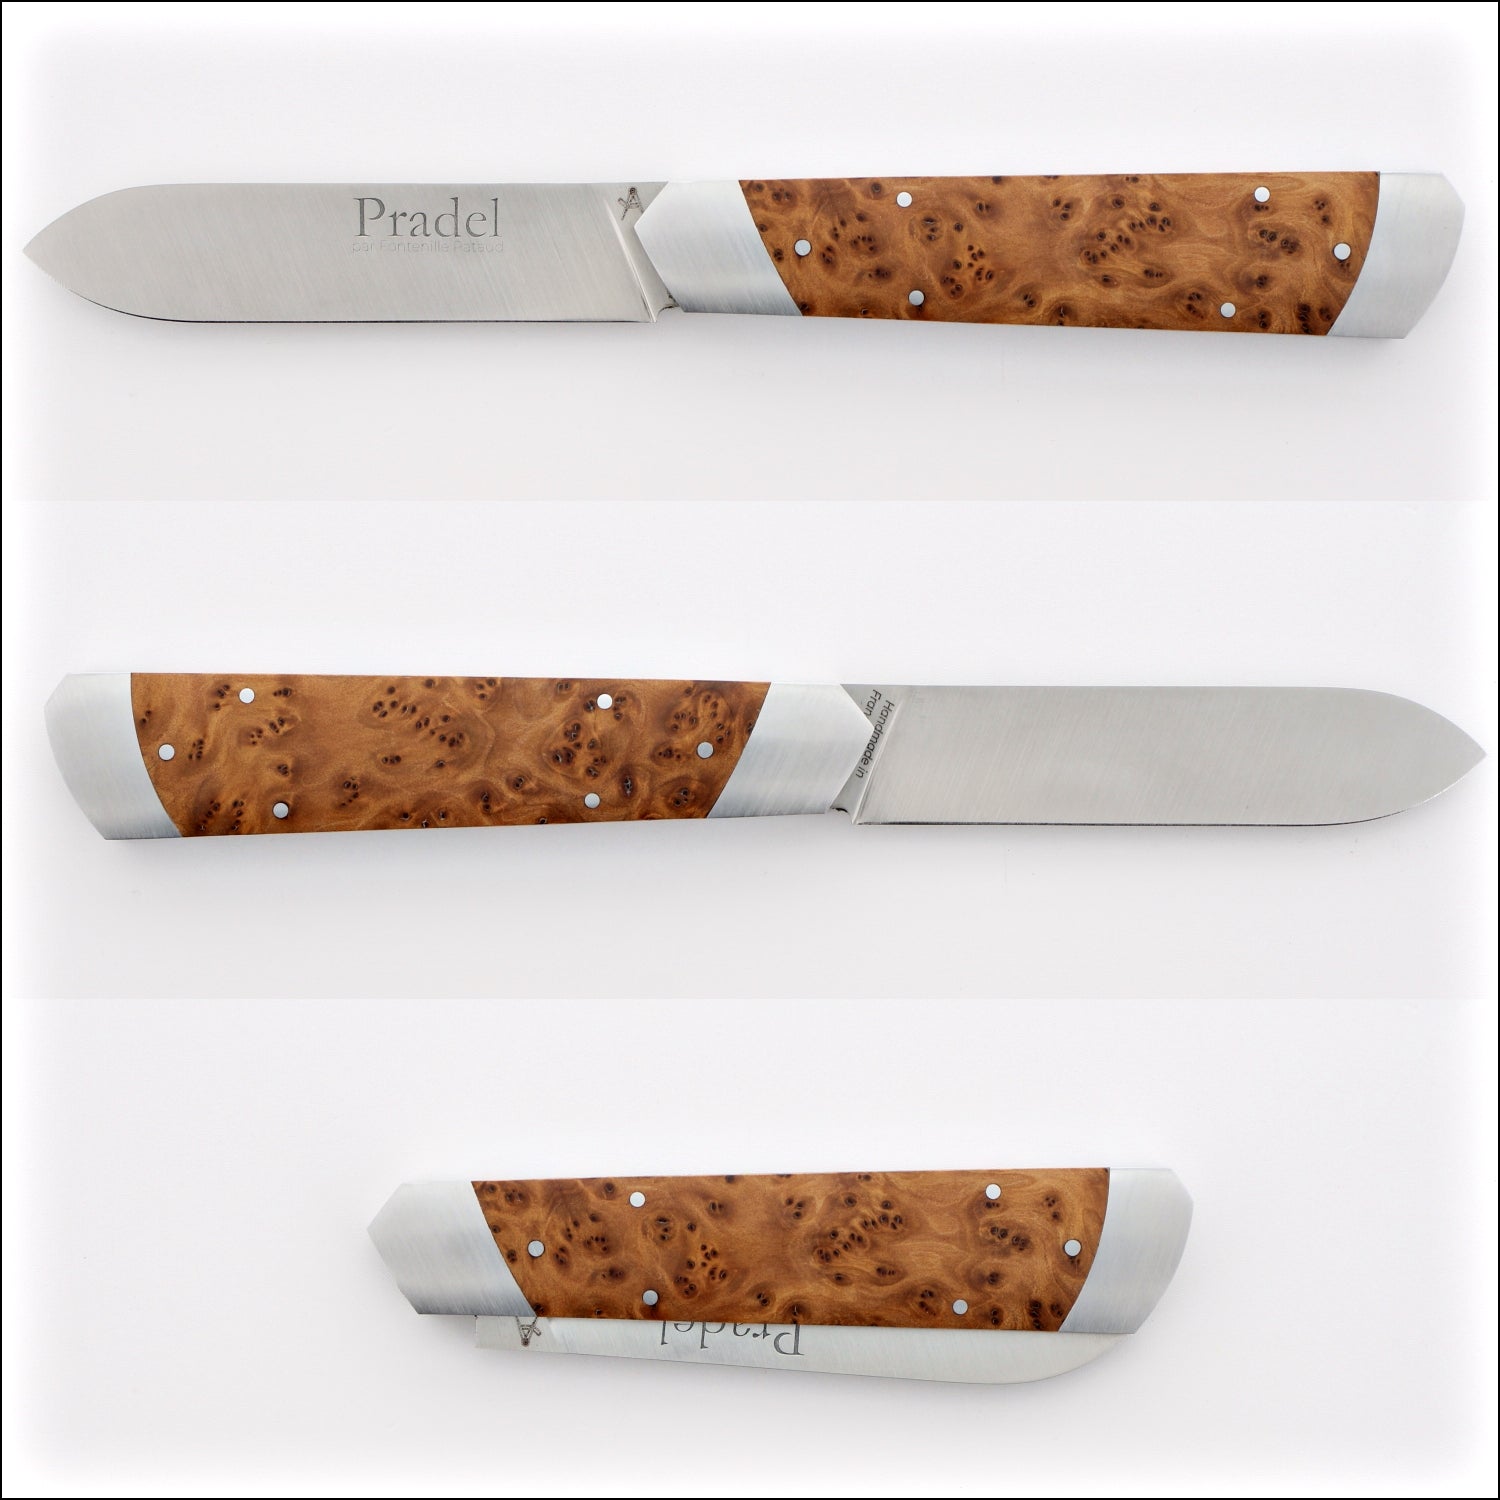 Pradel Folding Knife Thuya Burl Handle & Lock-Back by Fontenille Pataud